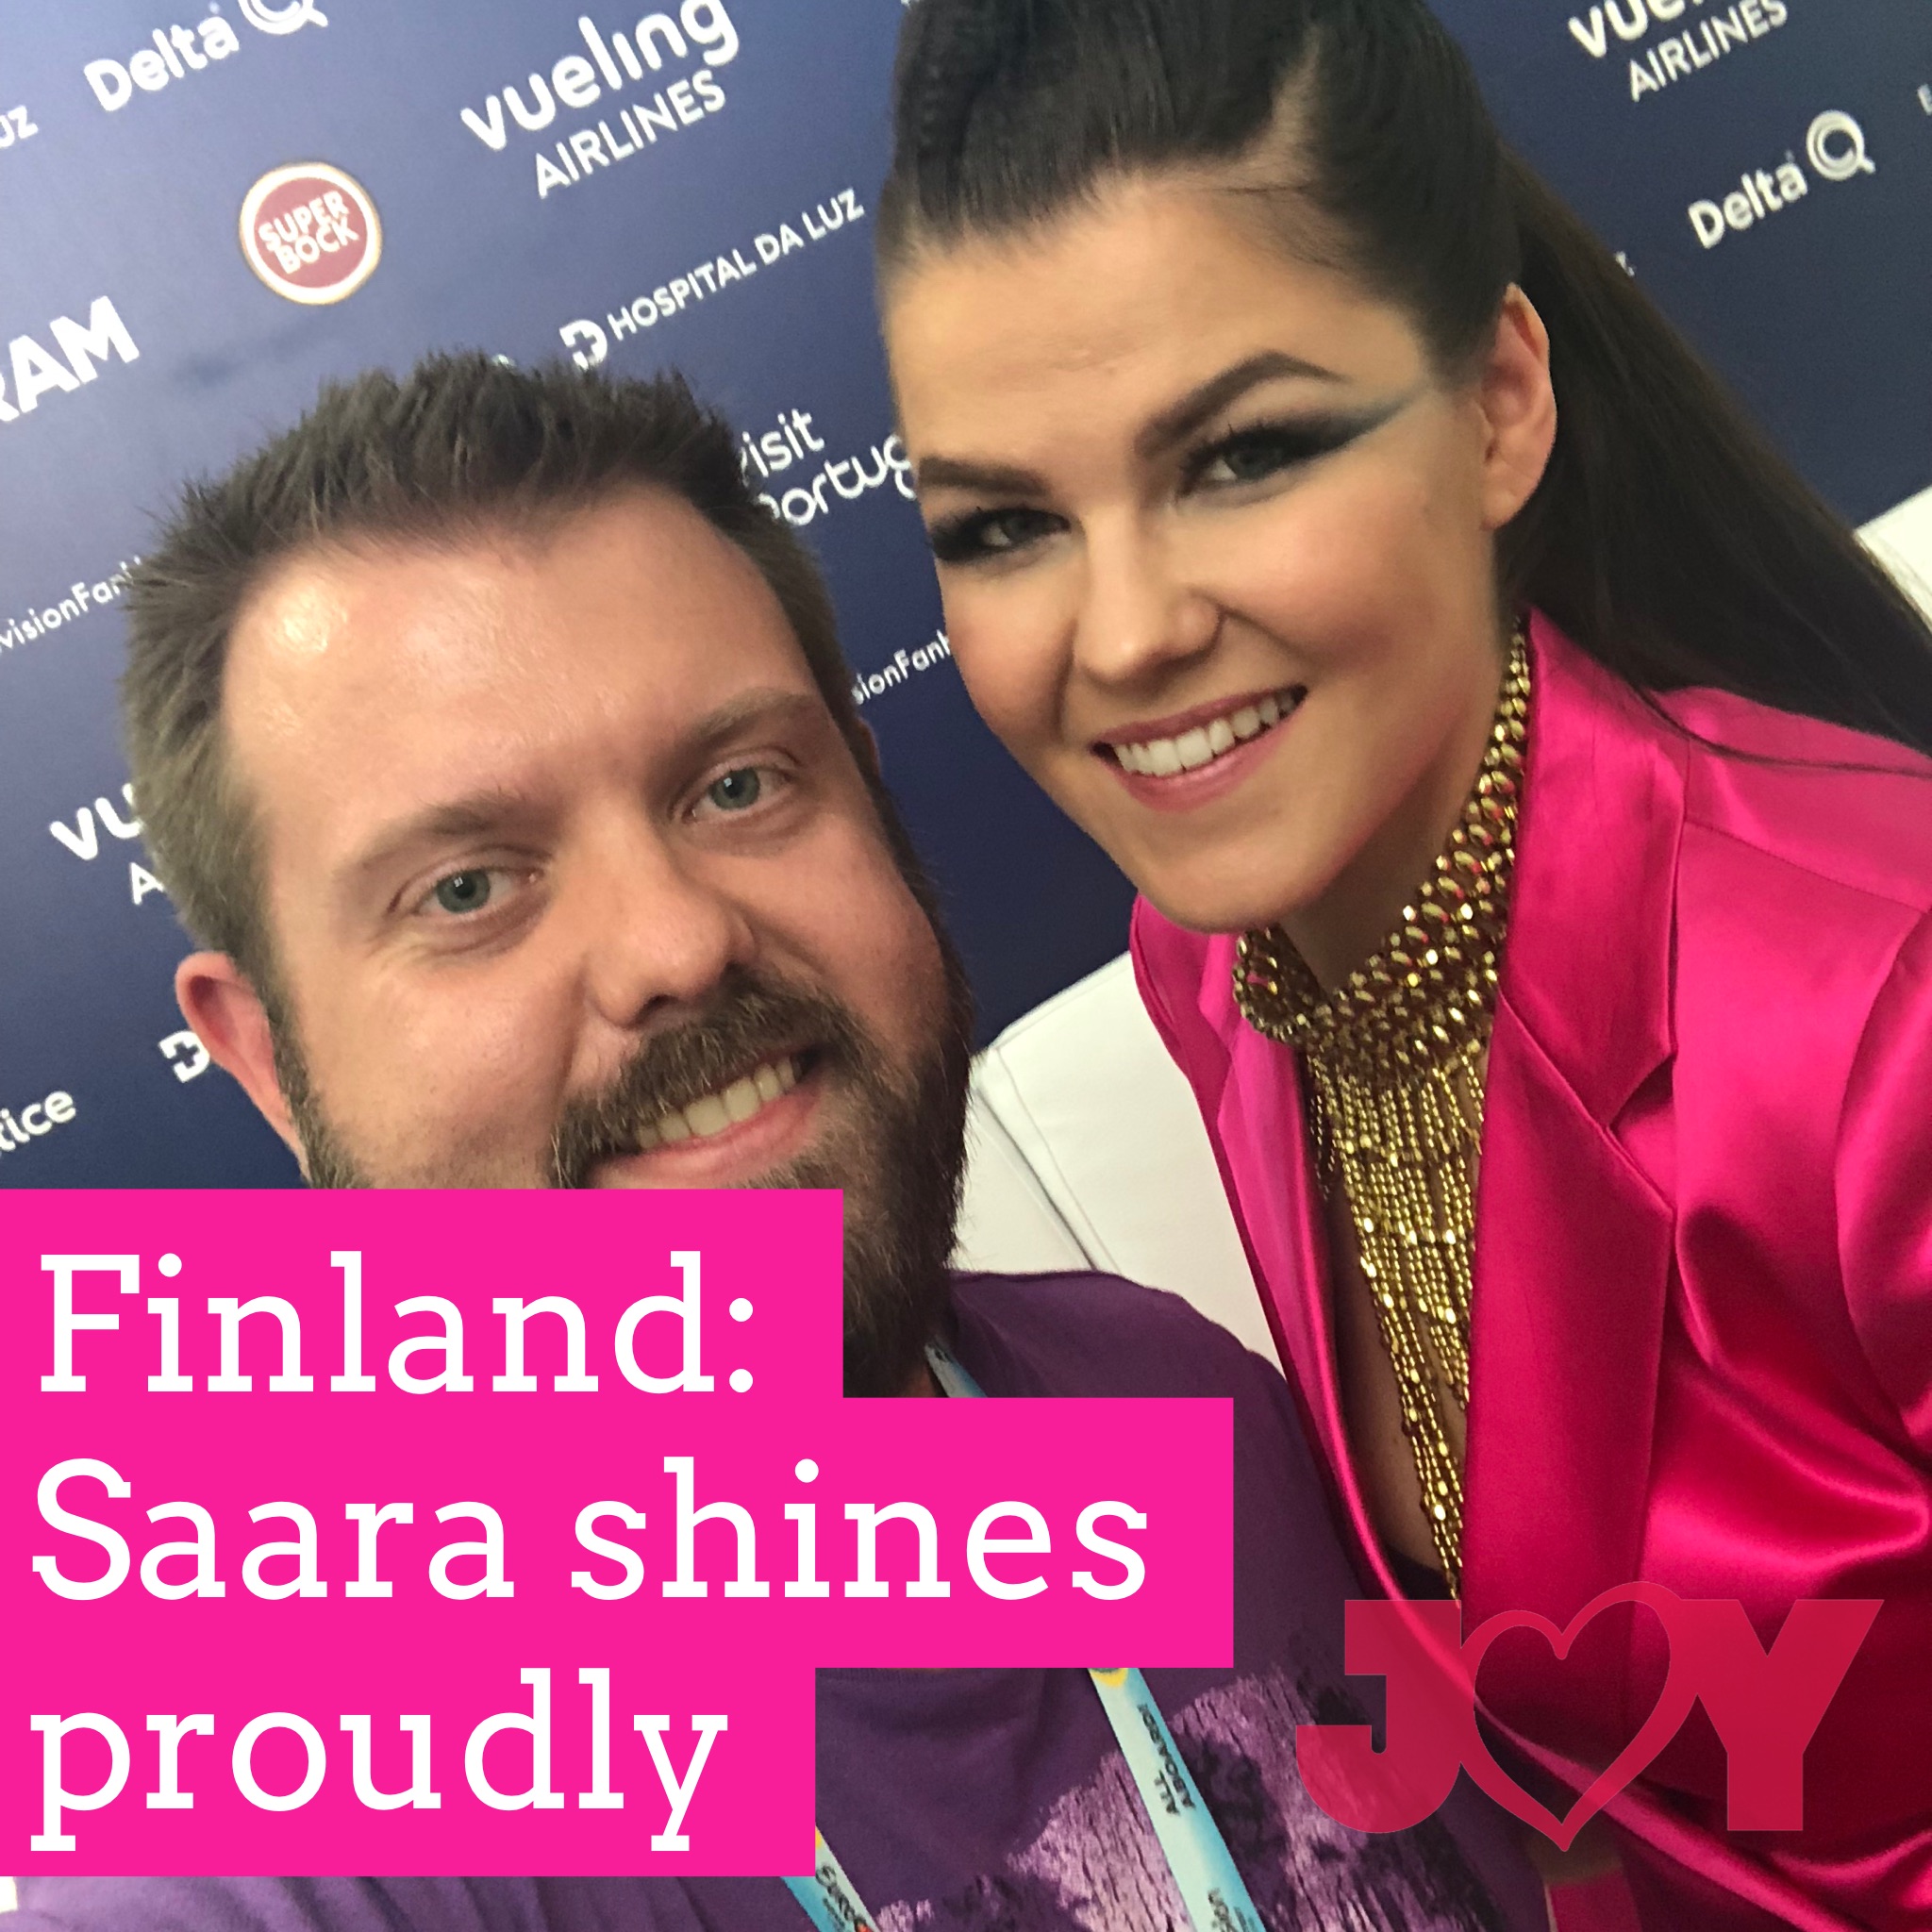 Finland: Saara shines proudly